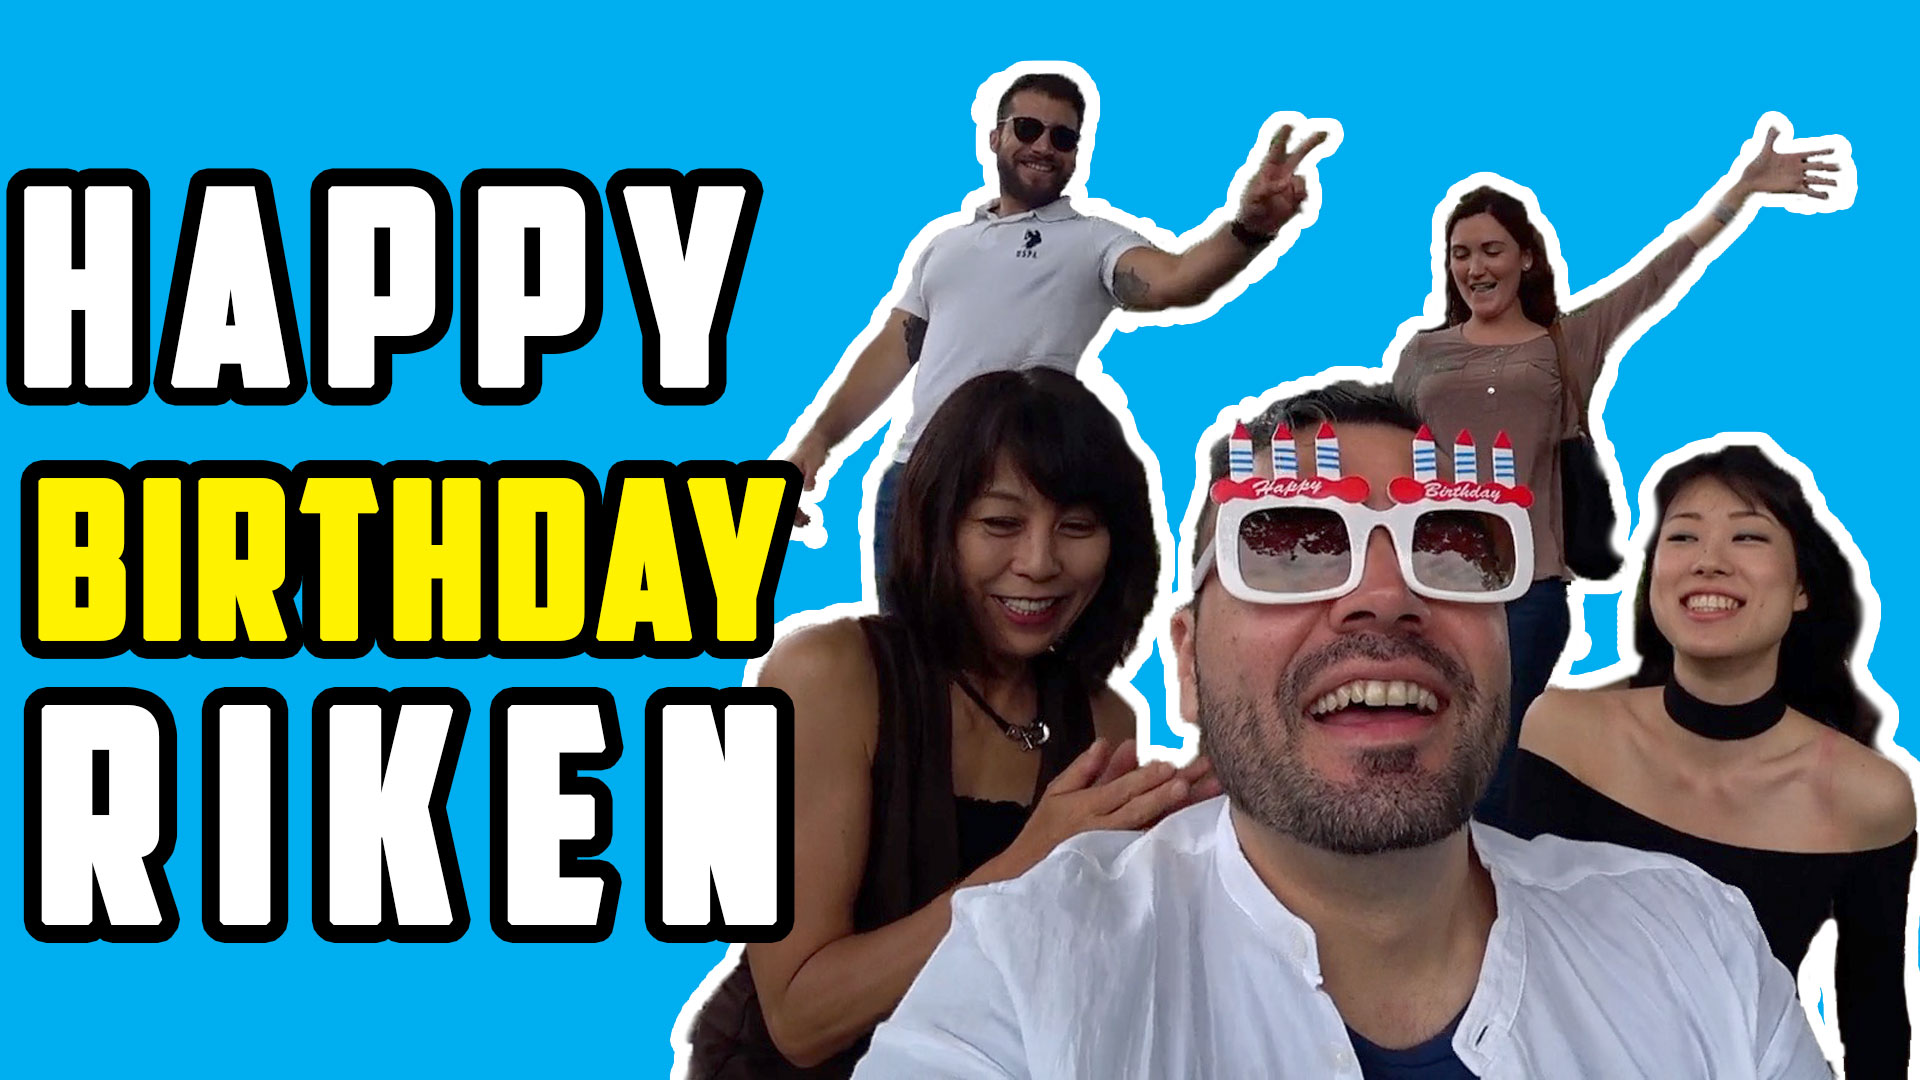 Happy birthday Mr. Riken